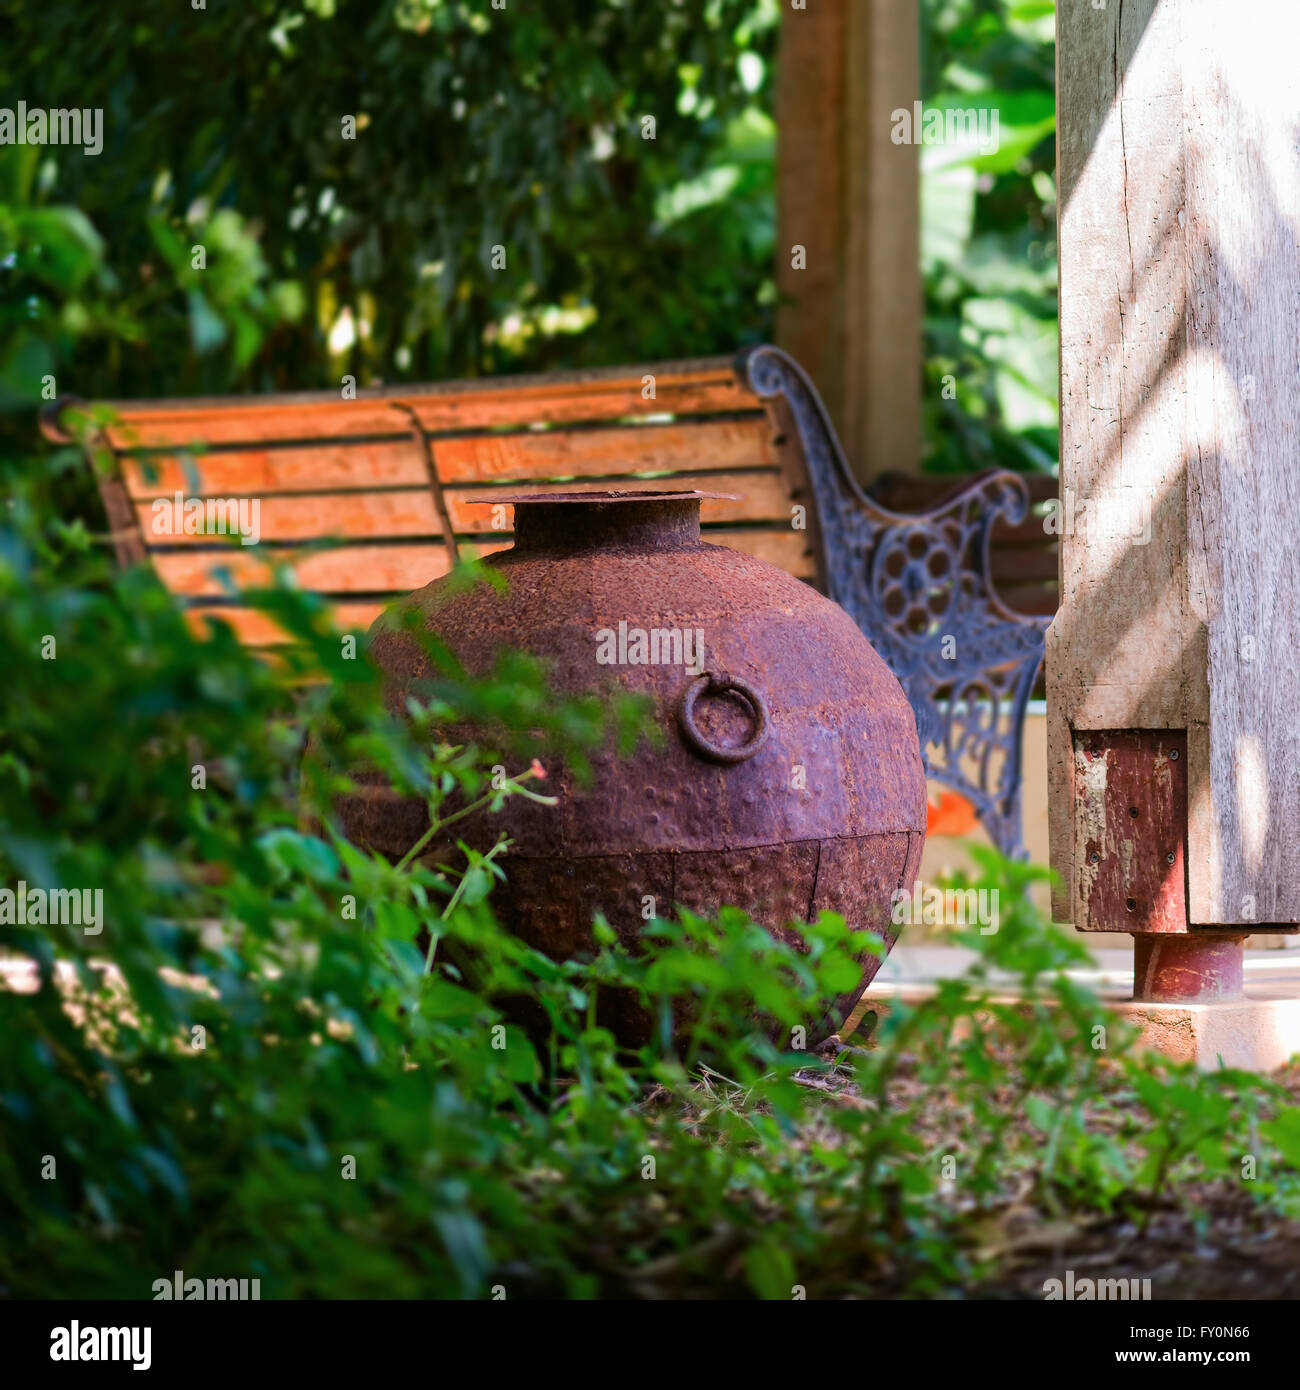 Dekorative Metall Eisentopf durch entspannende Umgebung Garten Zen Raumgestaltung quadratischen Pavillon Stockfoto